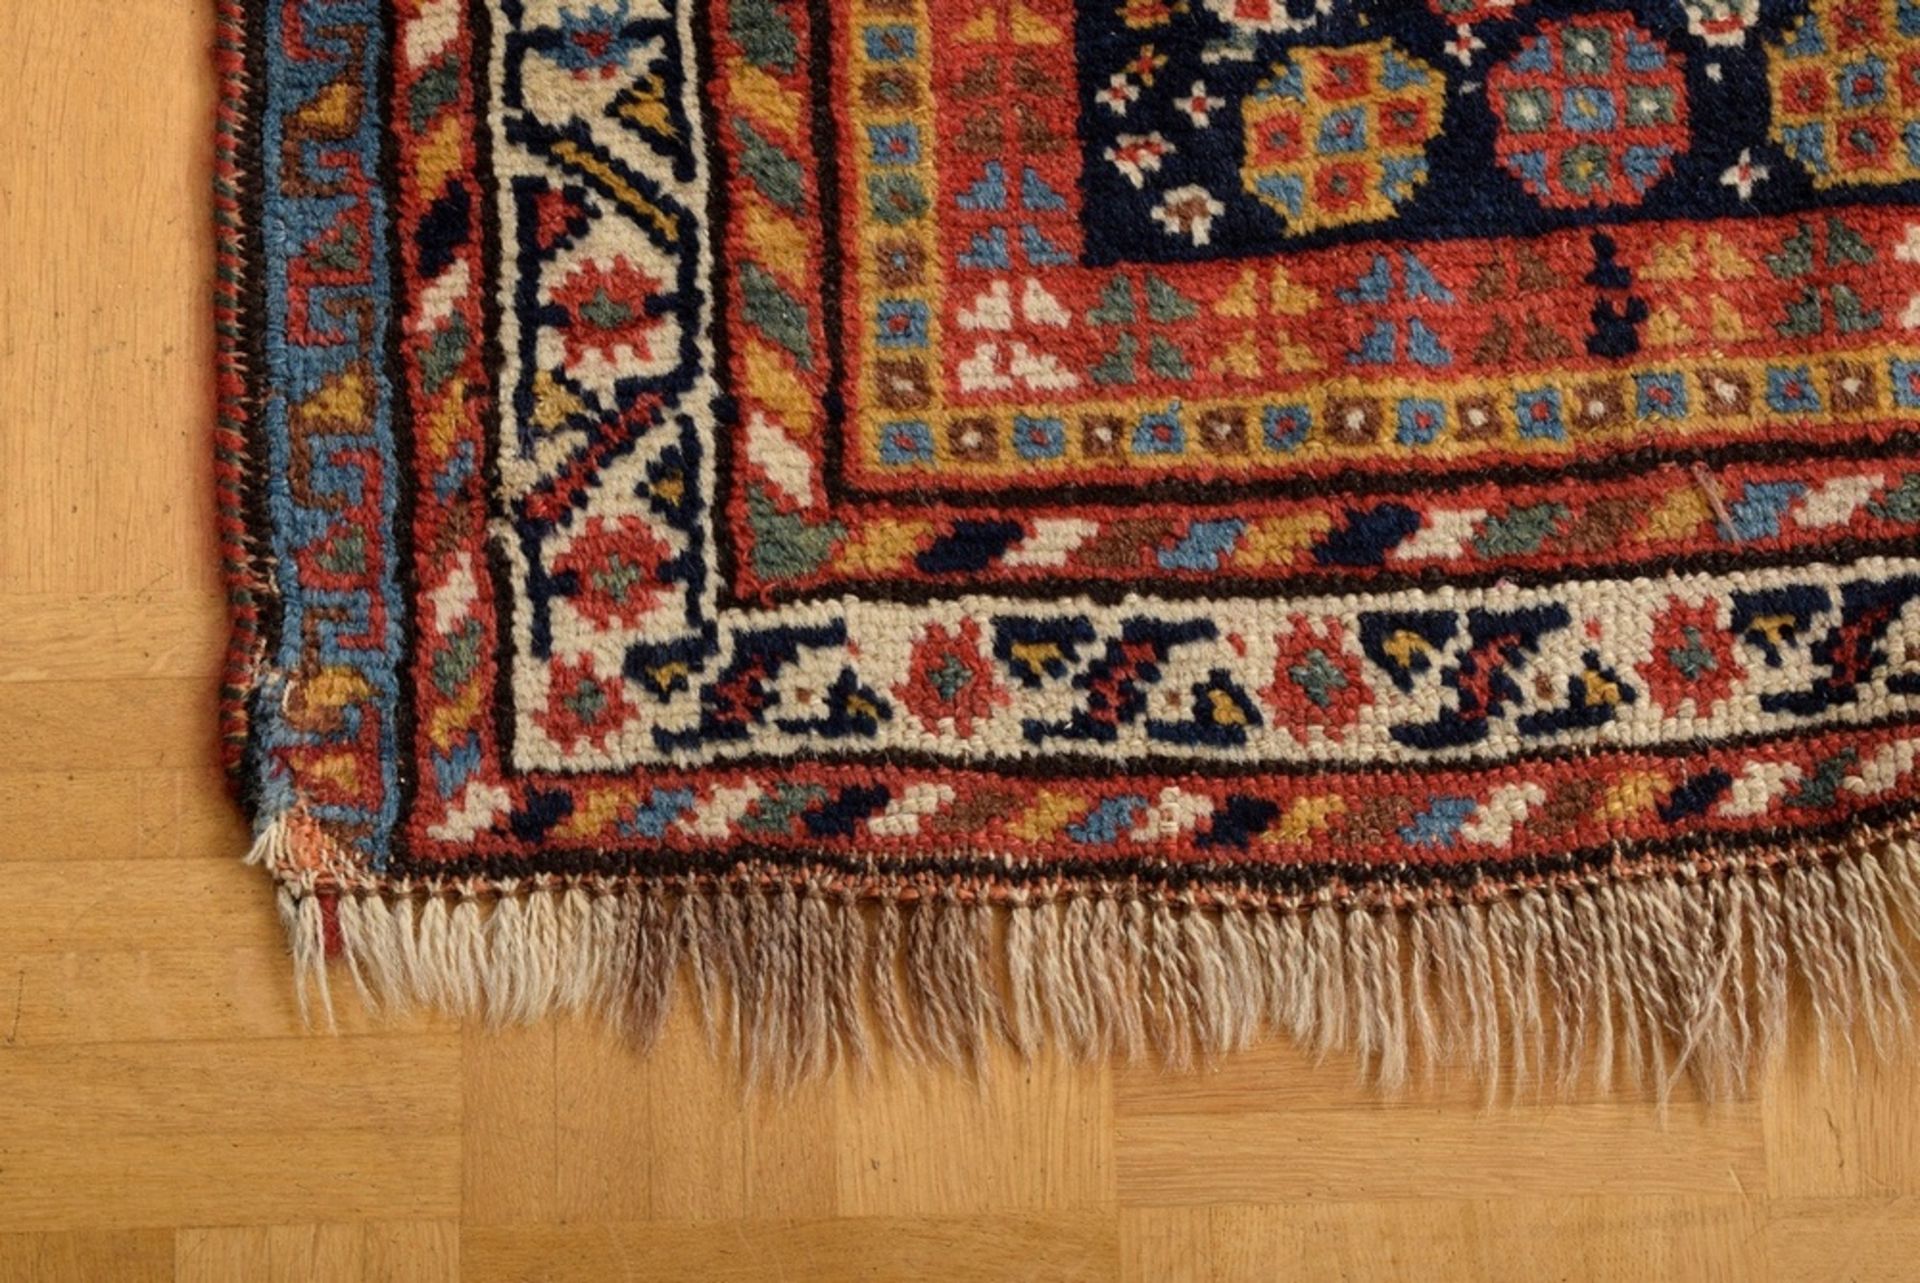 Luri Teppich mit Rapport roter und nachtblauer R | A Luri carpet with a rapport of red and midnight - Bild 5 aus 8